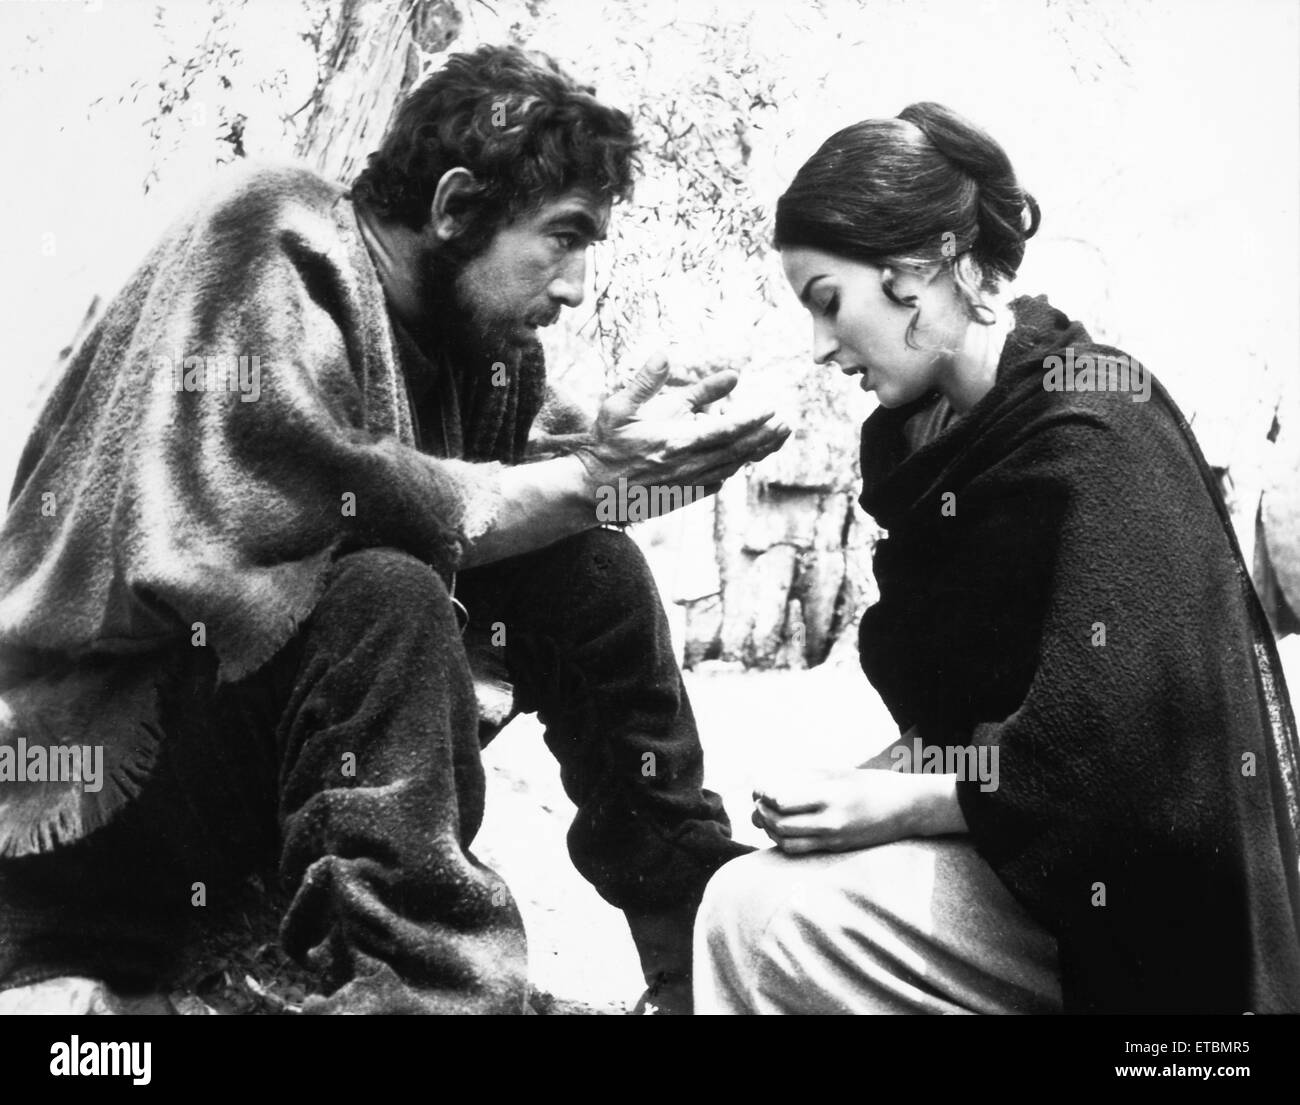 Anthony Quinn, Silvana Mangano, on-set of the Film 'Barabbas', 1961 Stock Photo